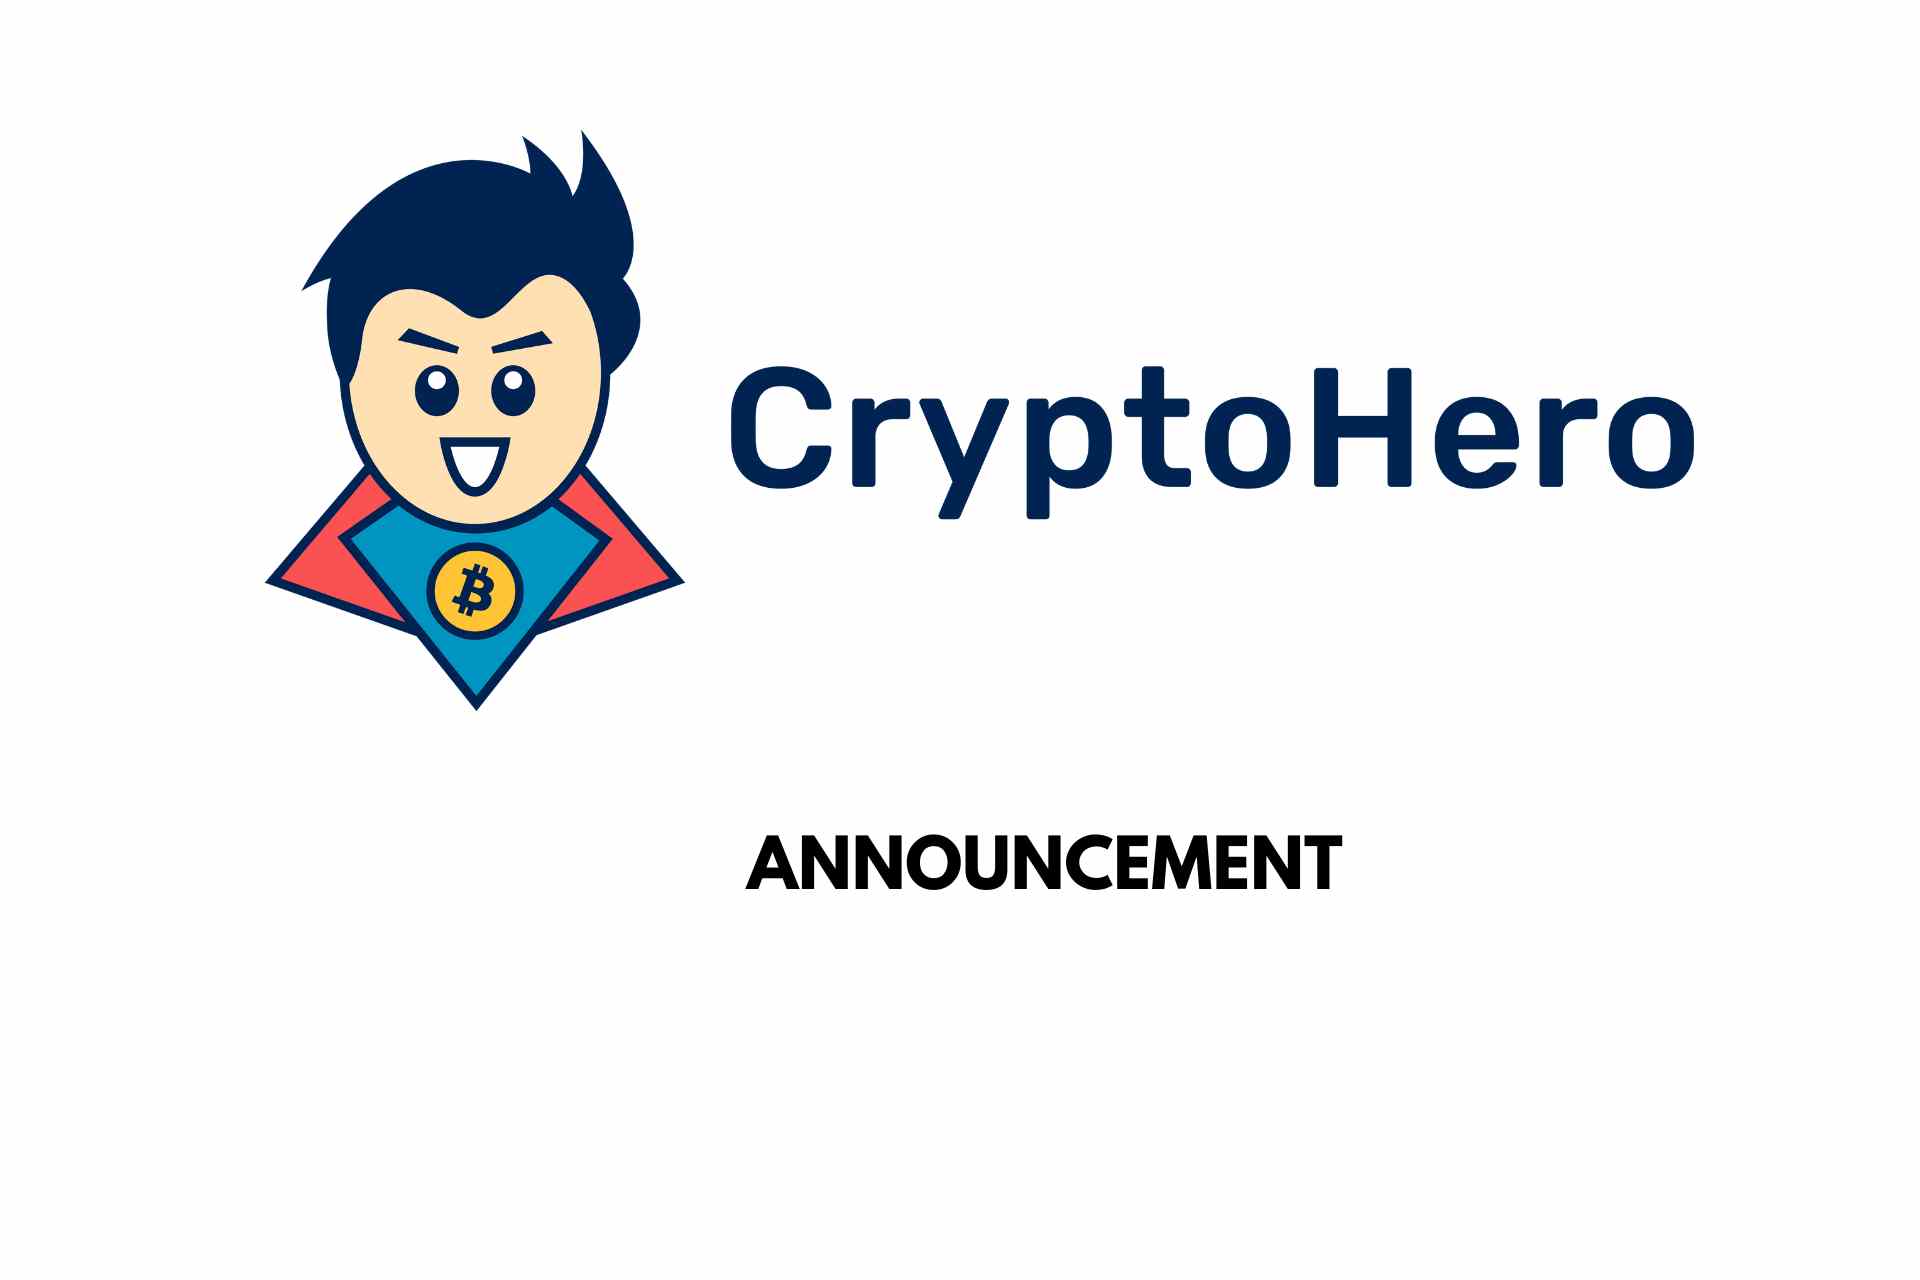 CryptoHero Announcement